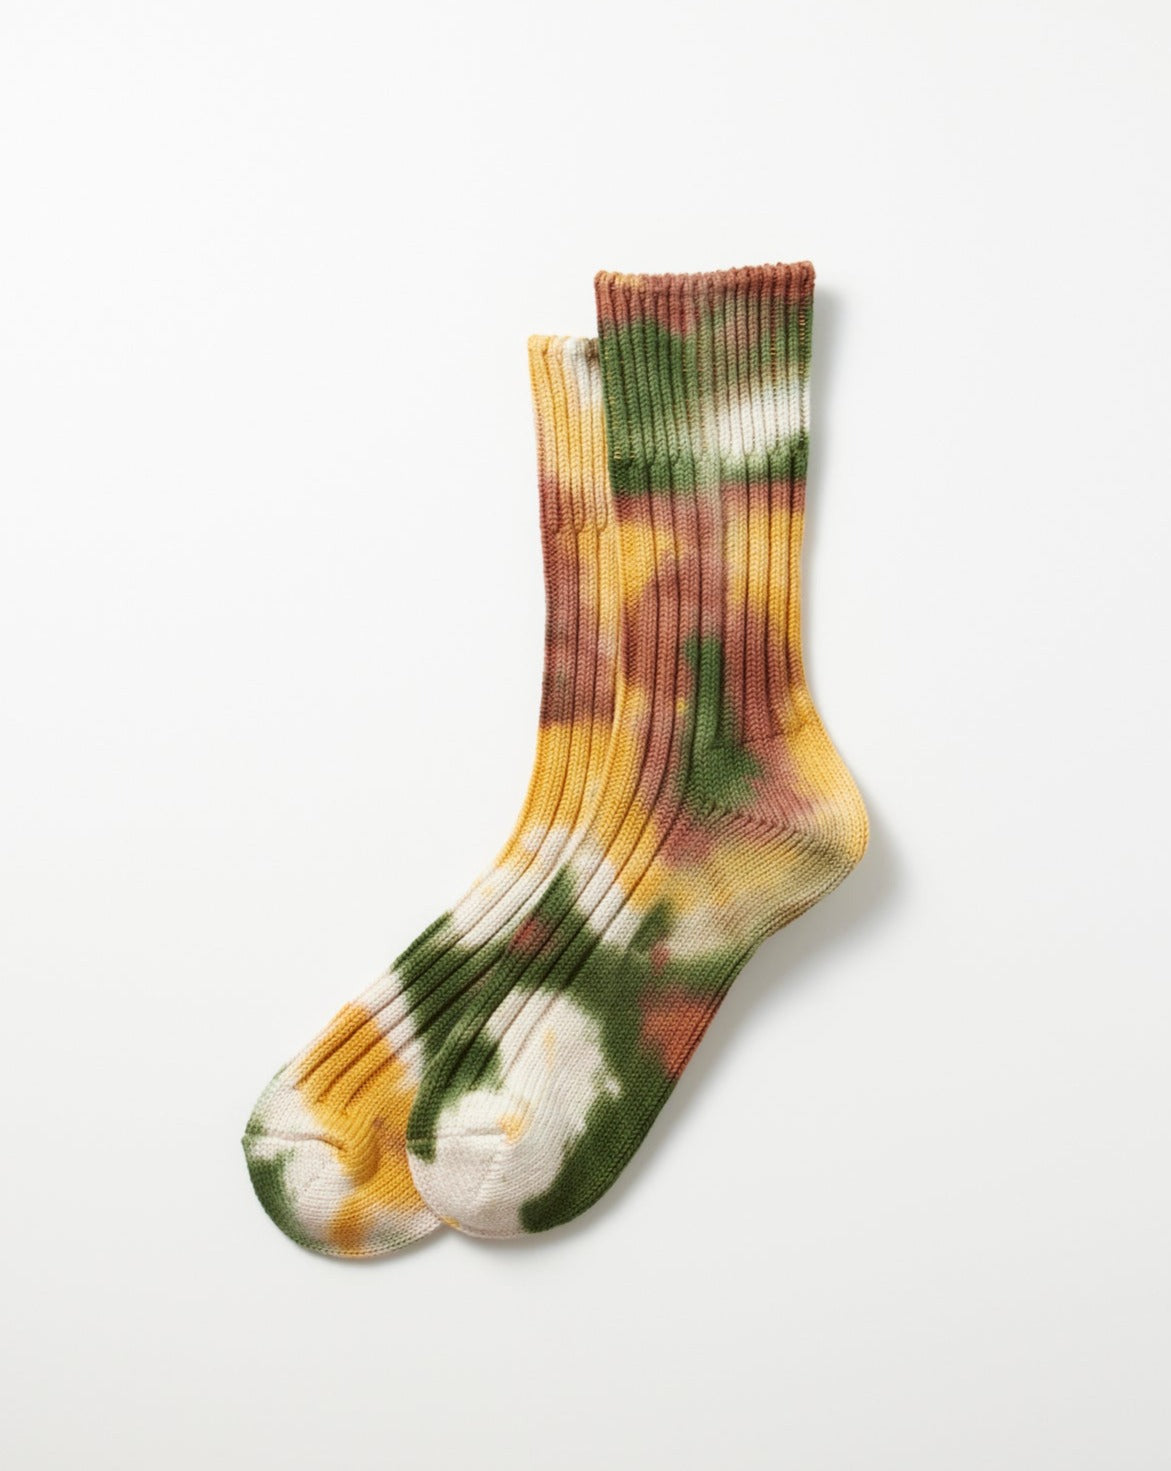 Chunky Ribbed Crew Socks "Tie Dye" - GRN/GLD/BRN